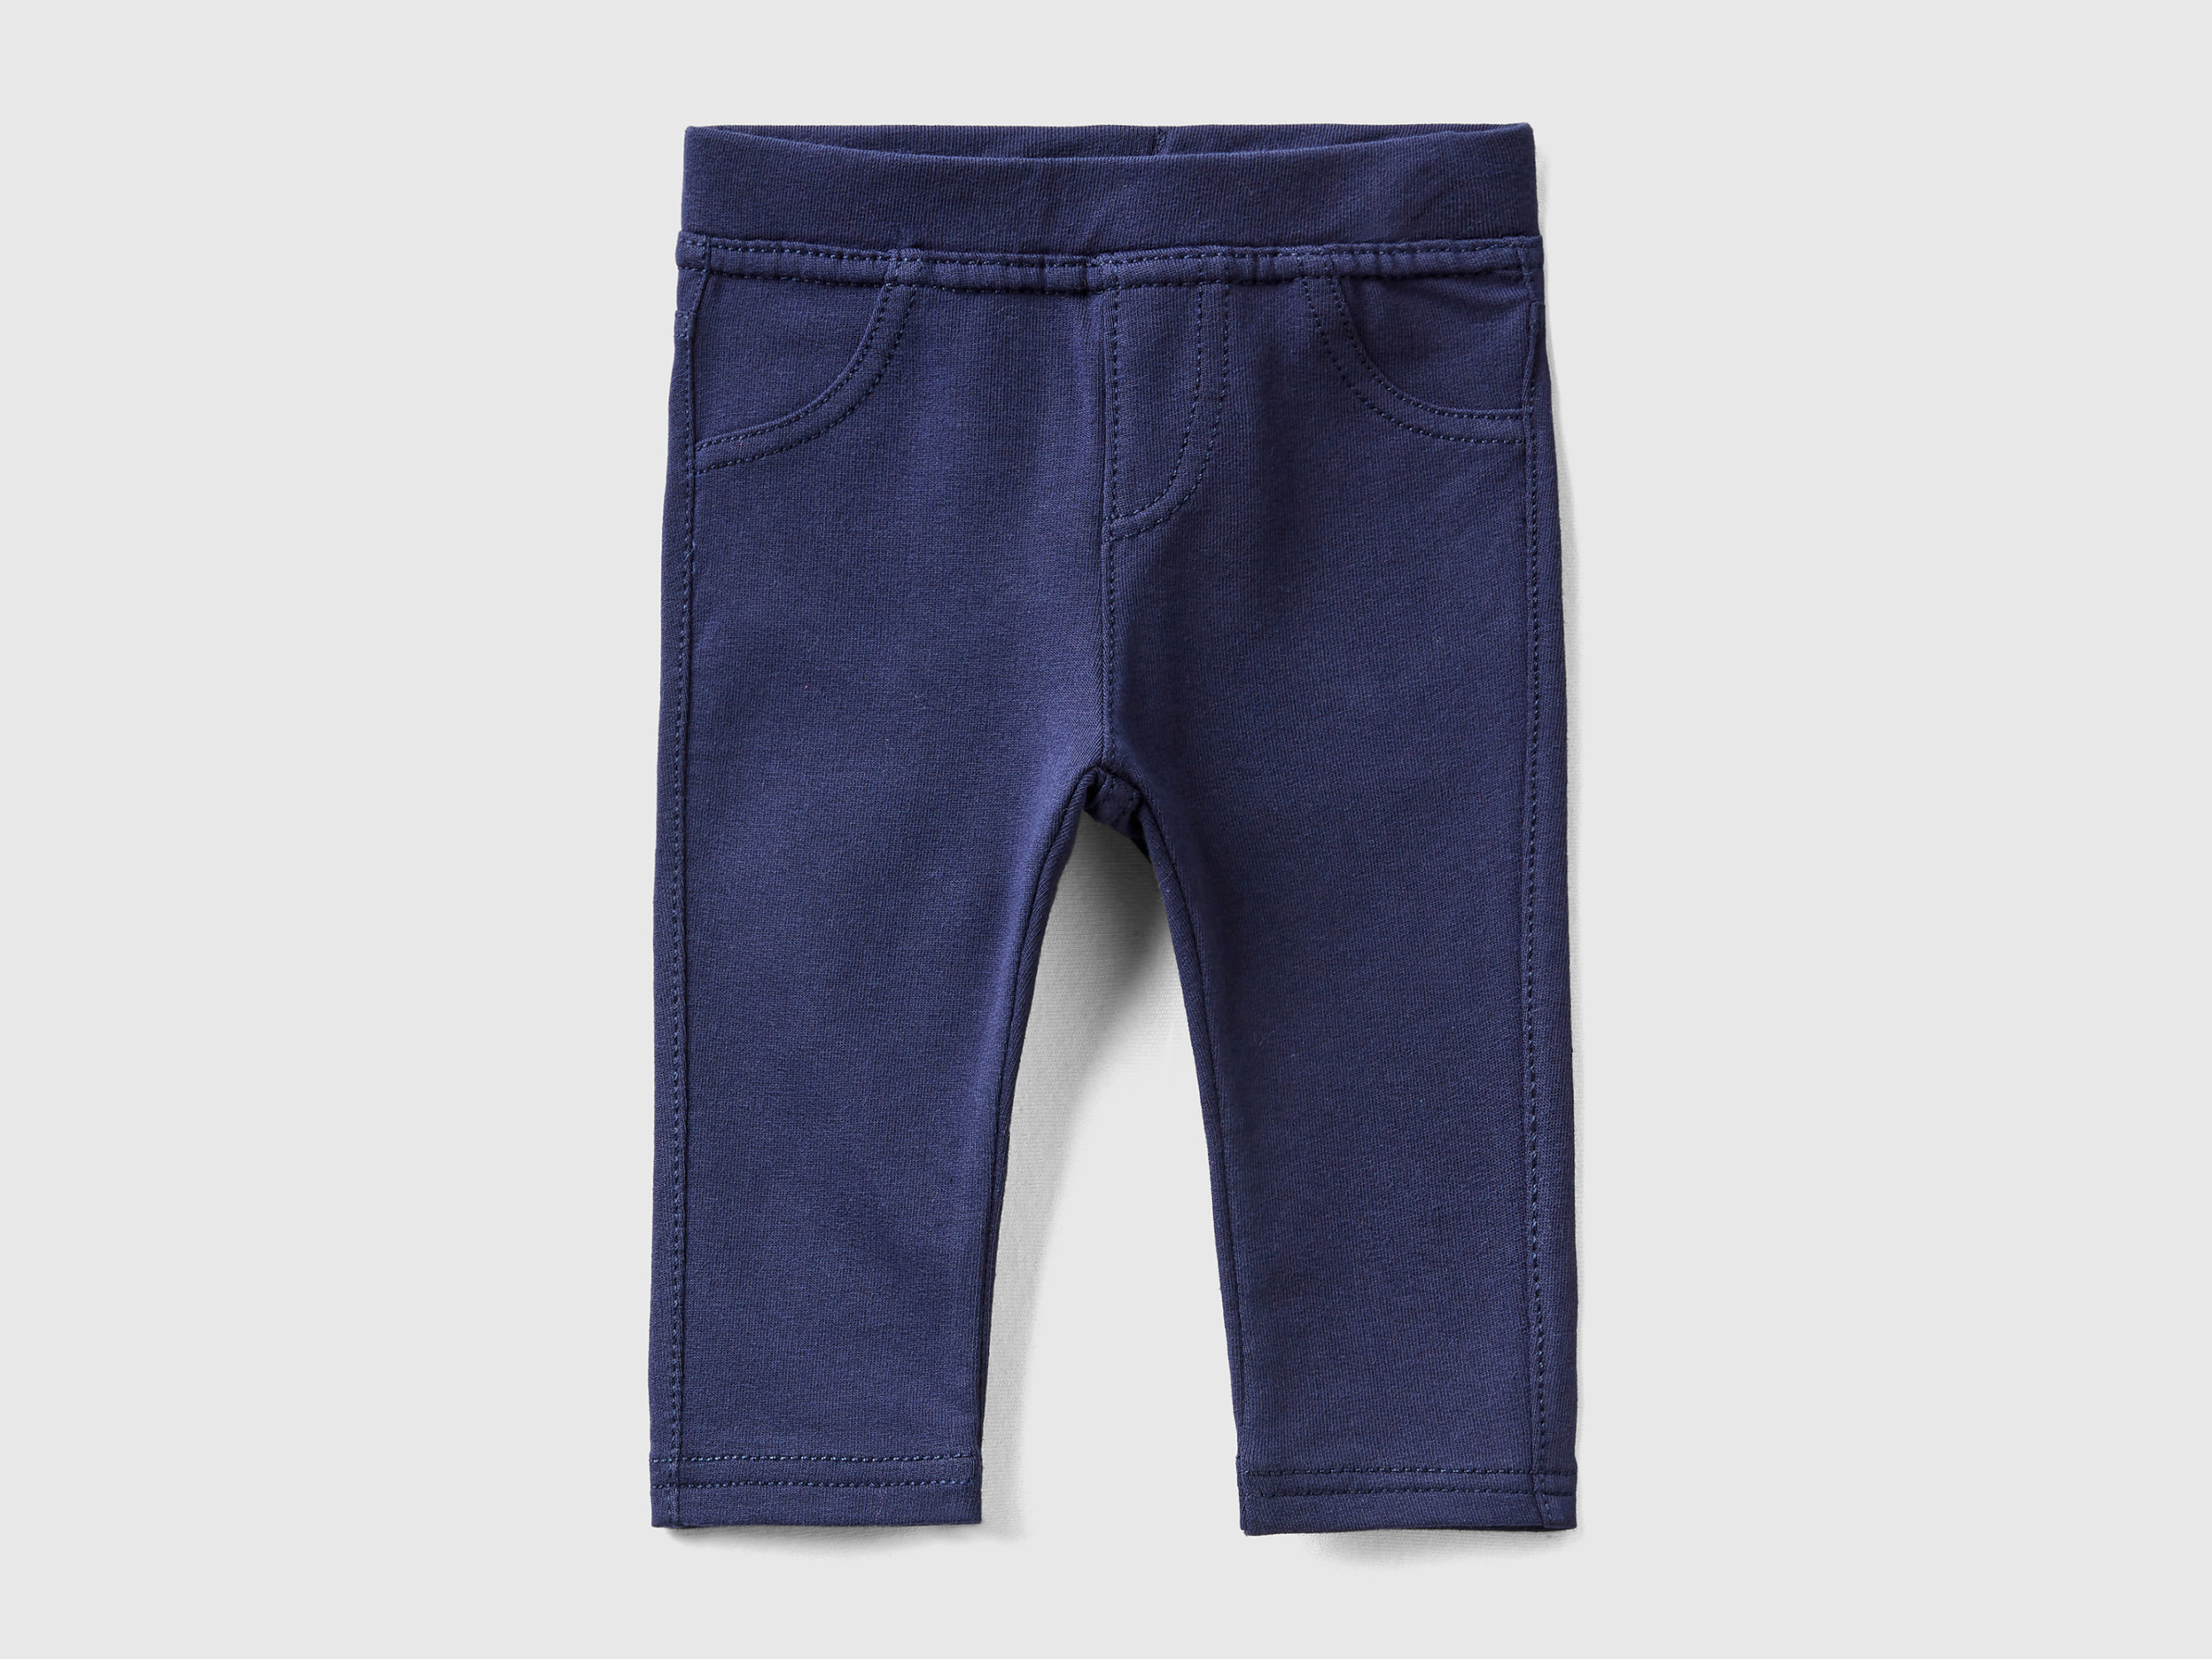 Benetton, Stretch Sweat Fabric Jeggings, size 9-12, Dark Blue, Kids